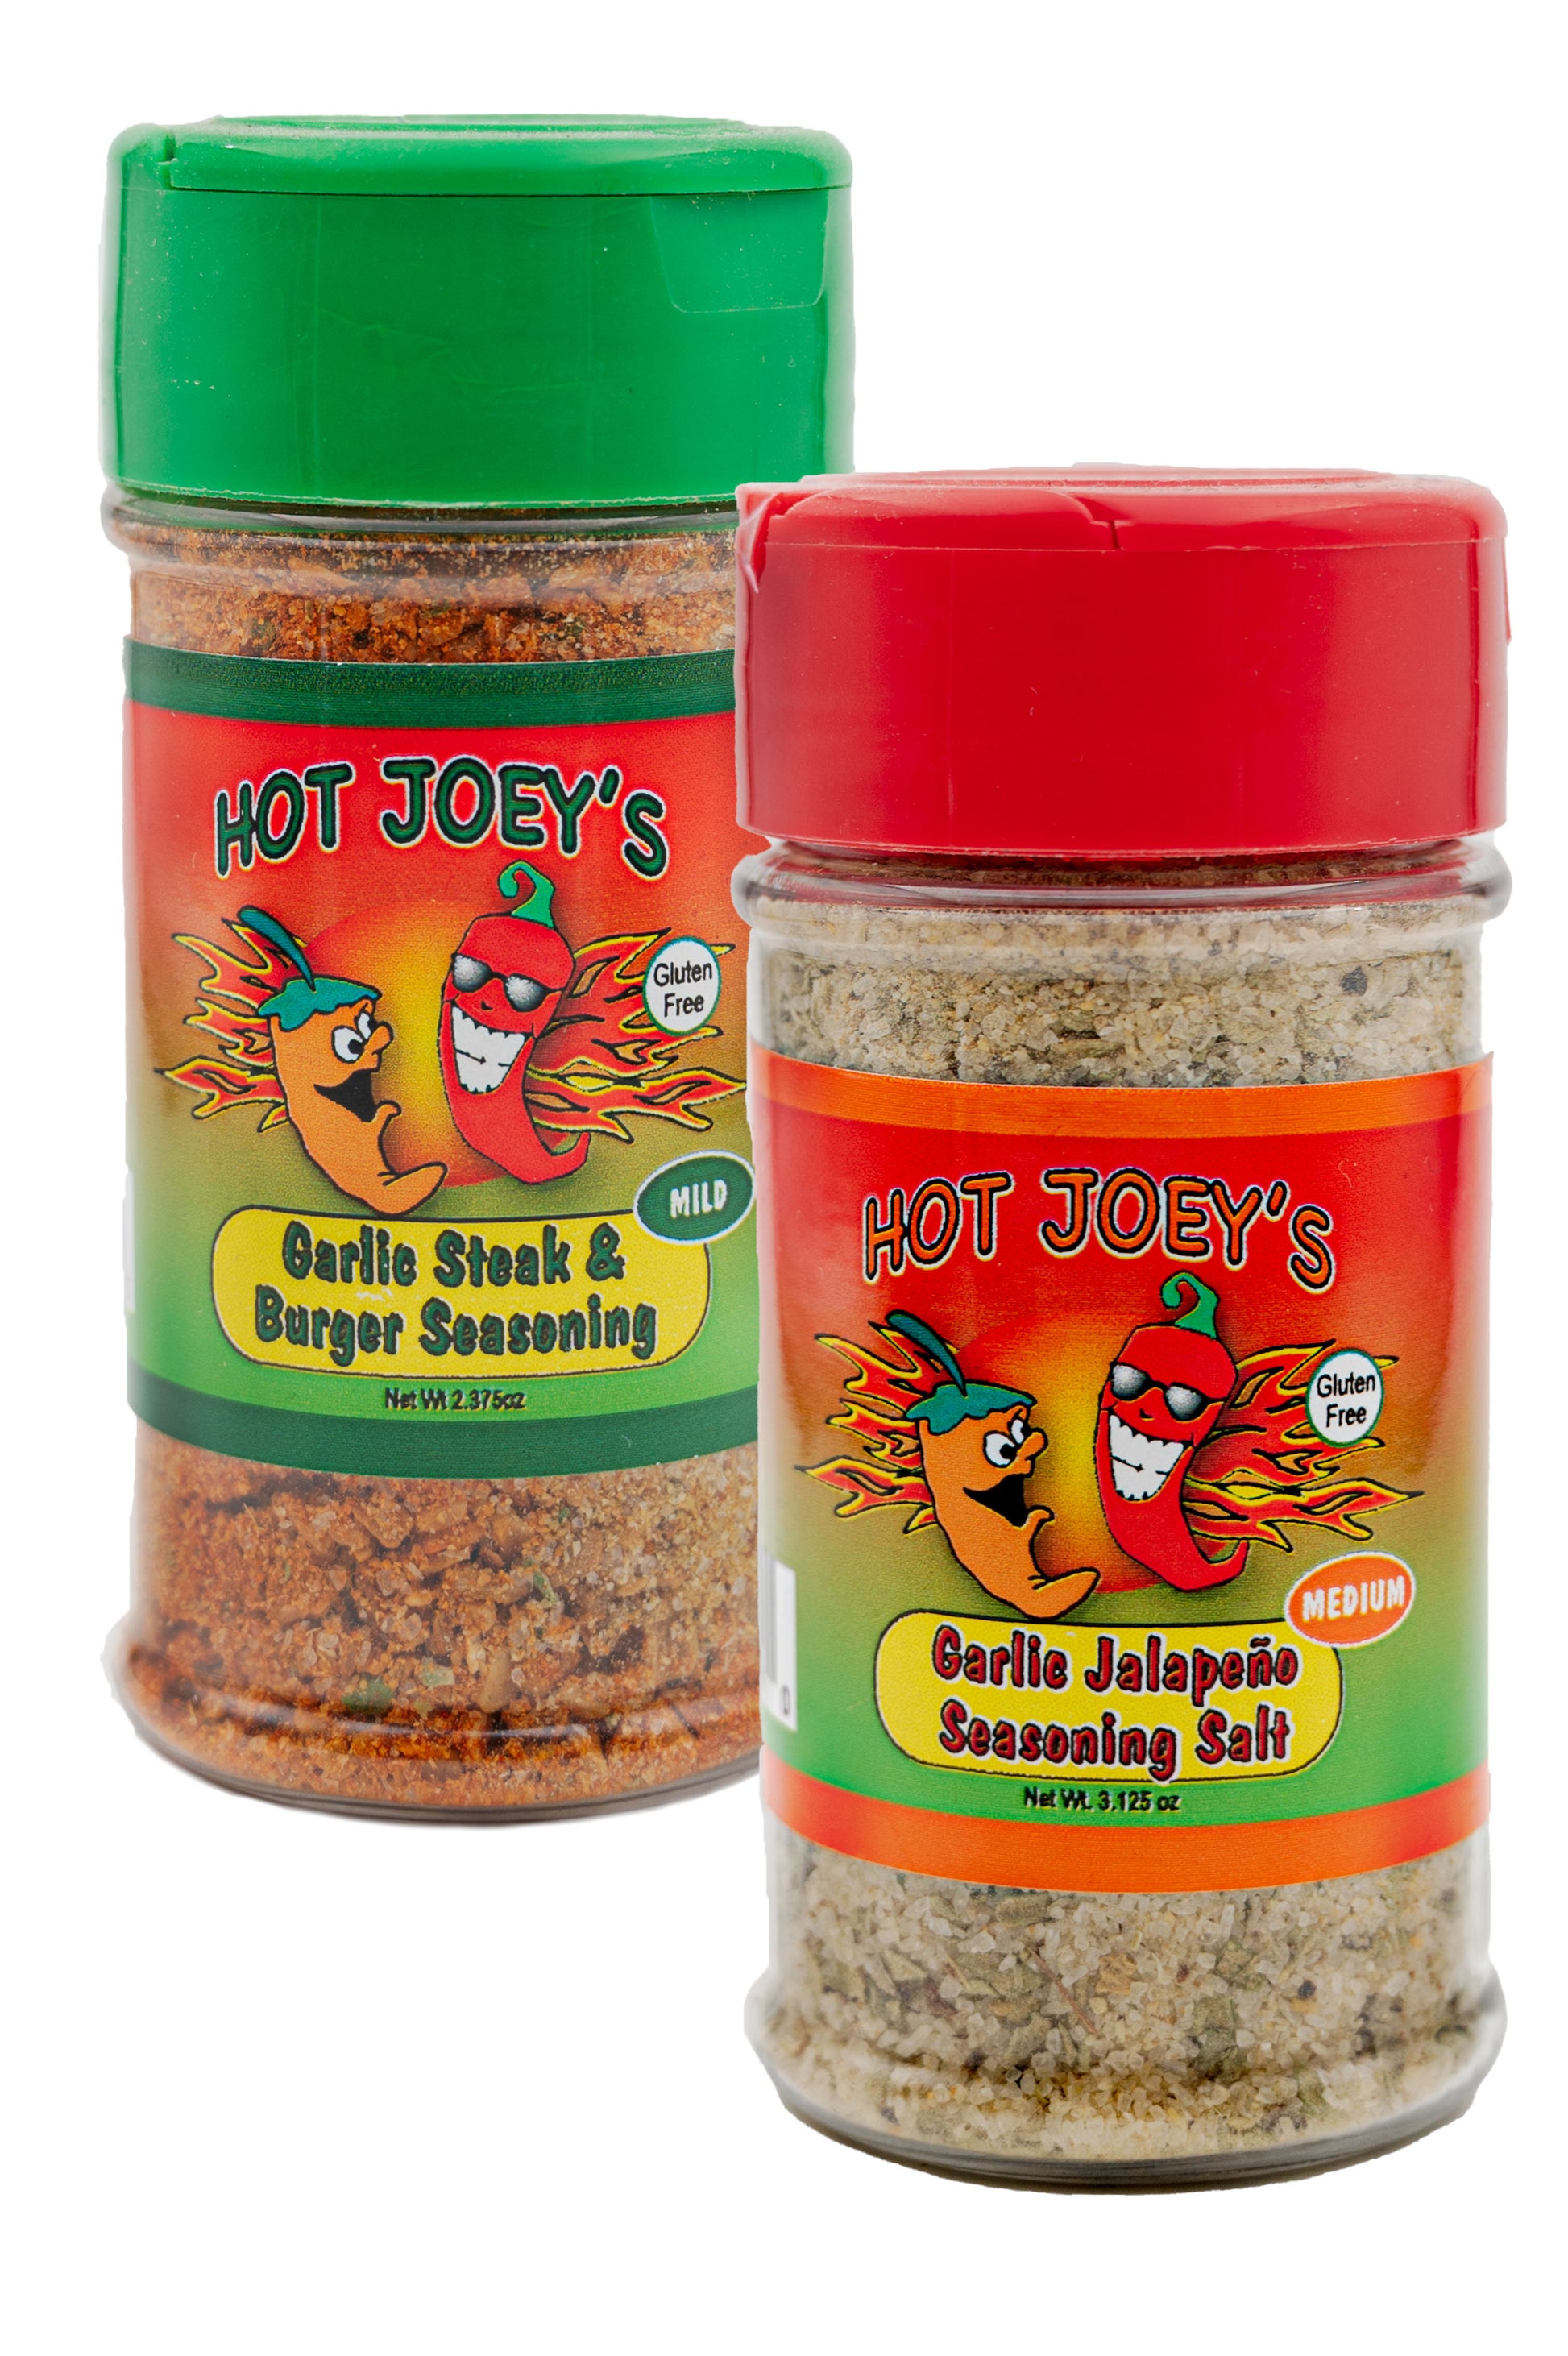 Garlic Jalapeno Seasoning Salt (Net Wt: 3.125oz) – Hot Joey's Hot